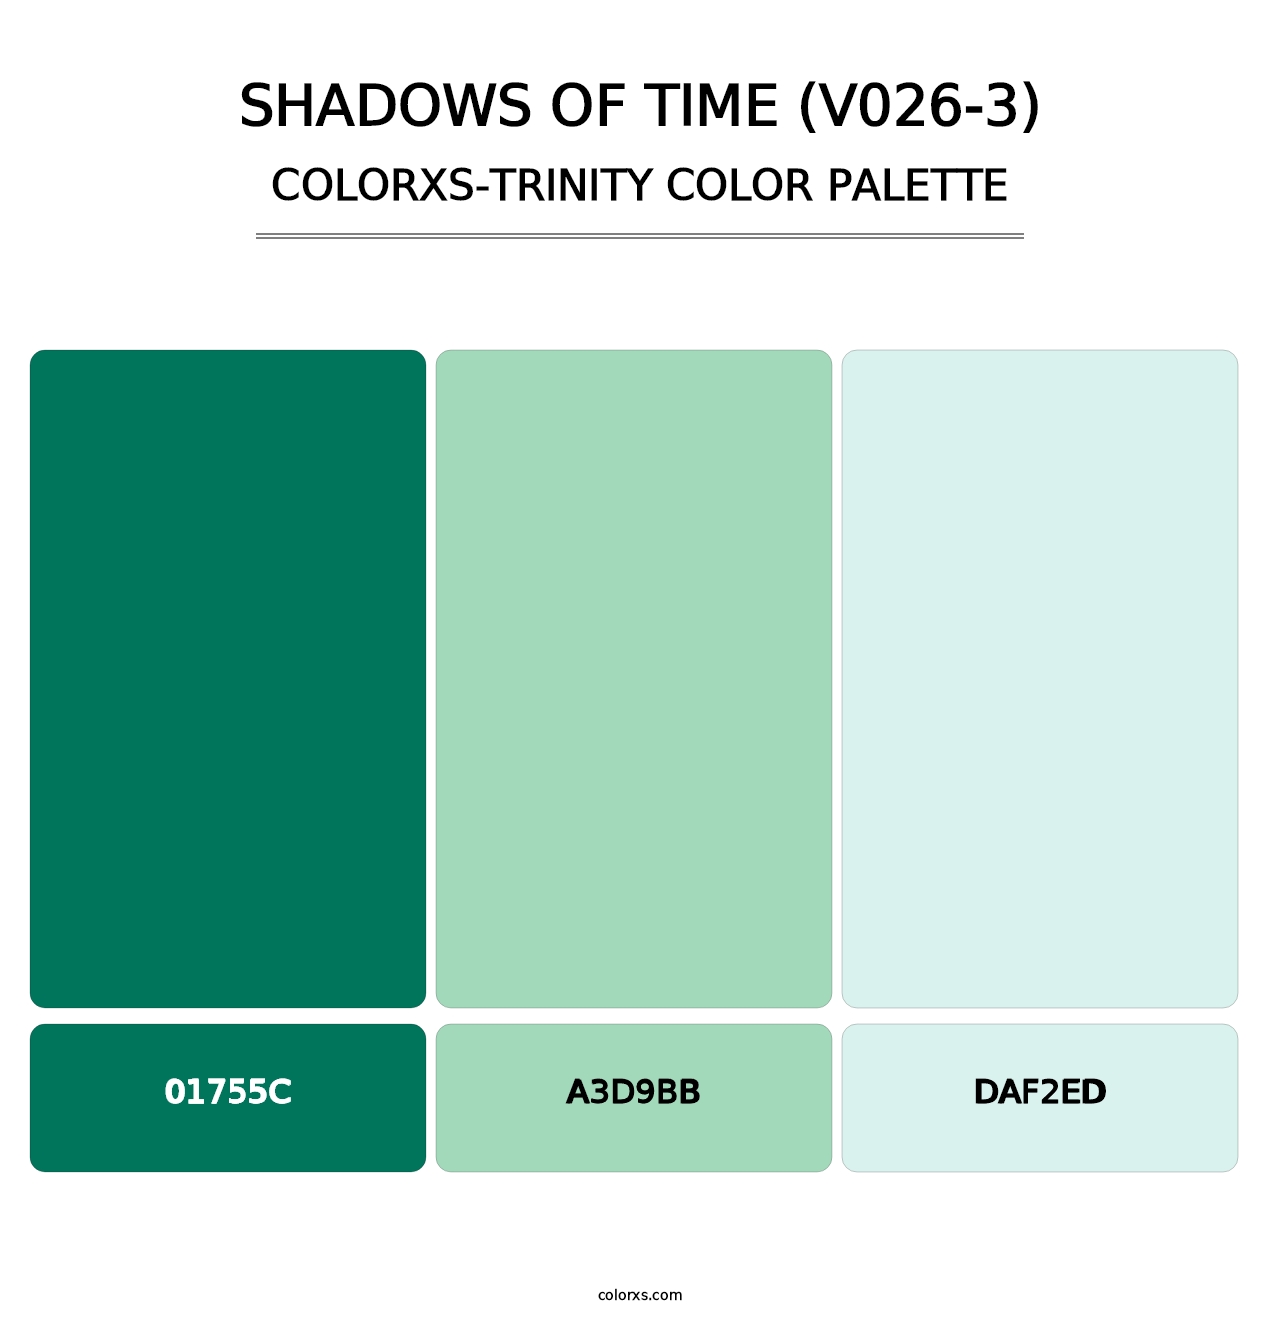 Shadows of Time (V026-3) - Colorxs Trinity Palette